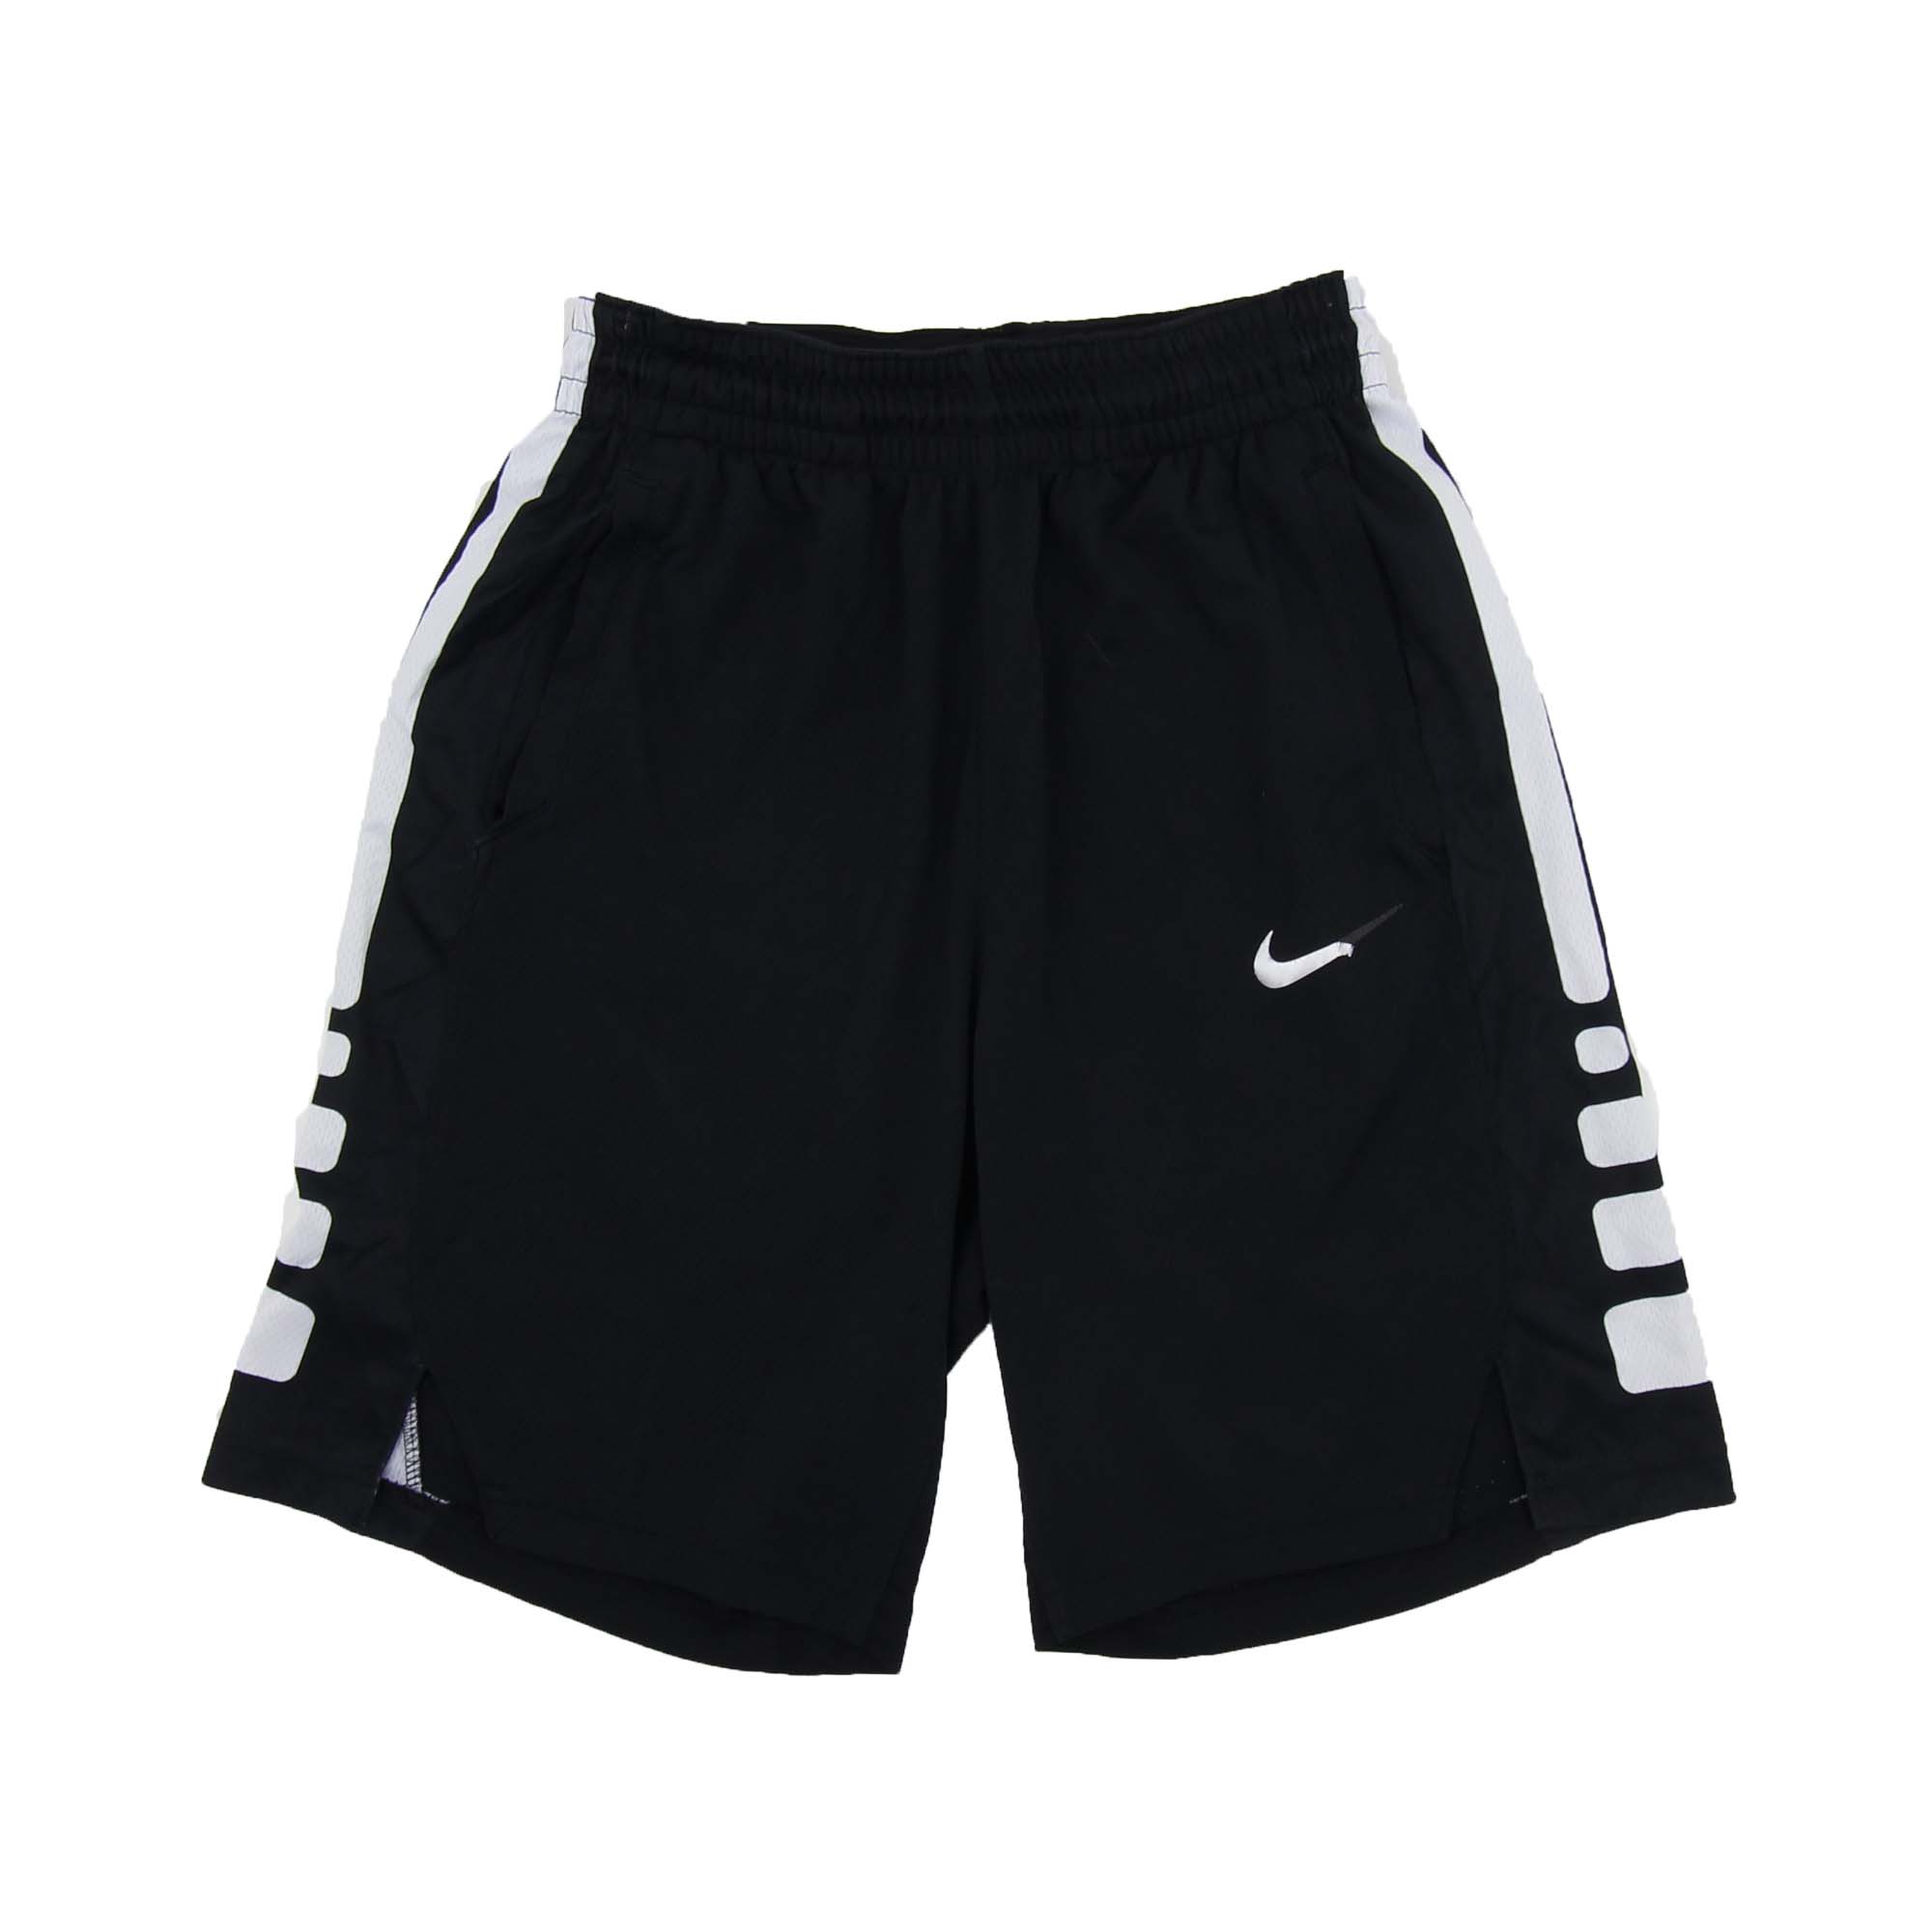 Nike Printed Logo Shorts - S